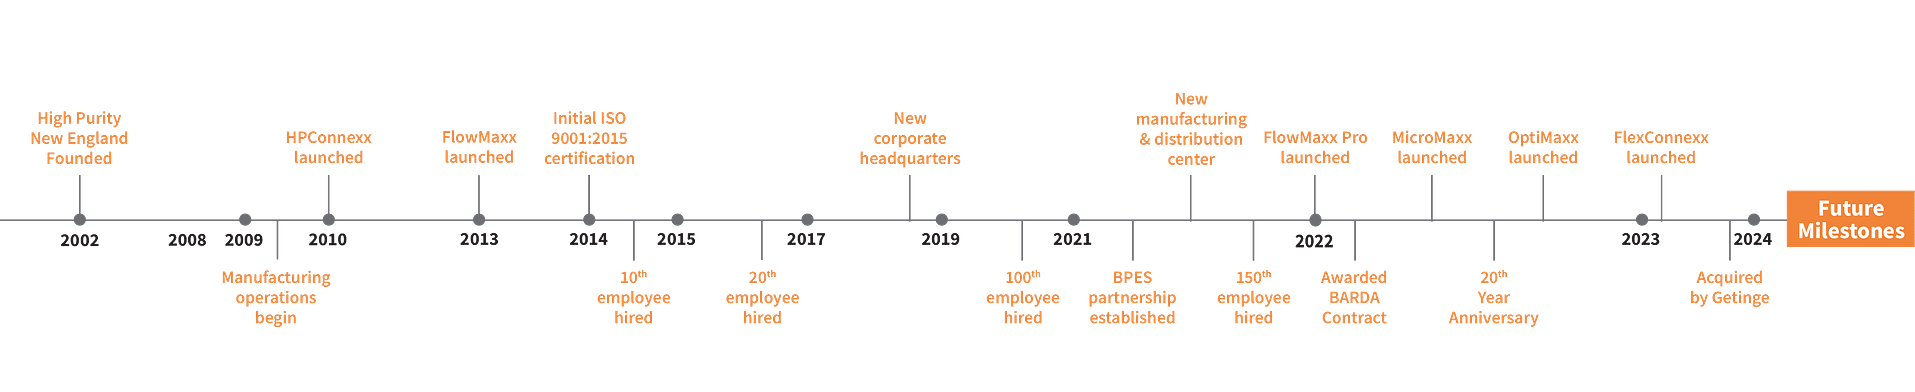 HPNE Timeline Graphic_Horizontal